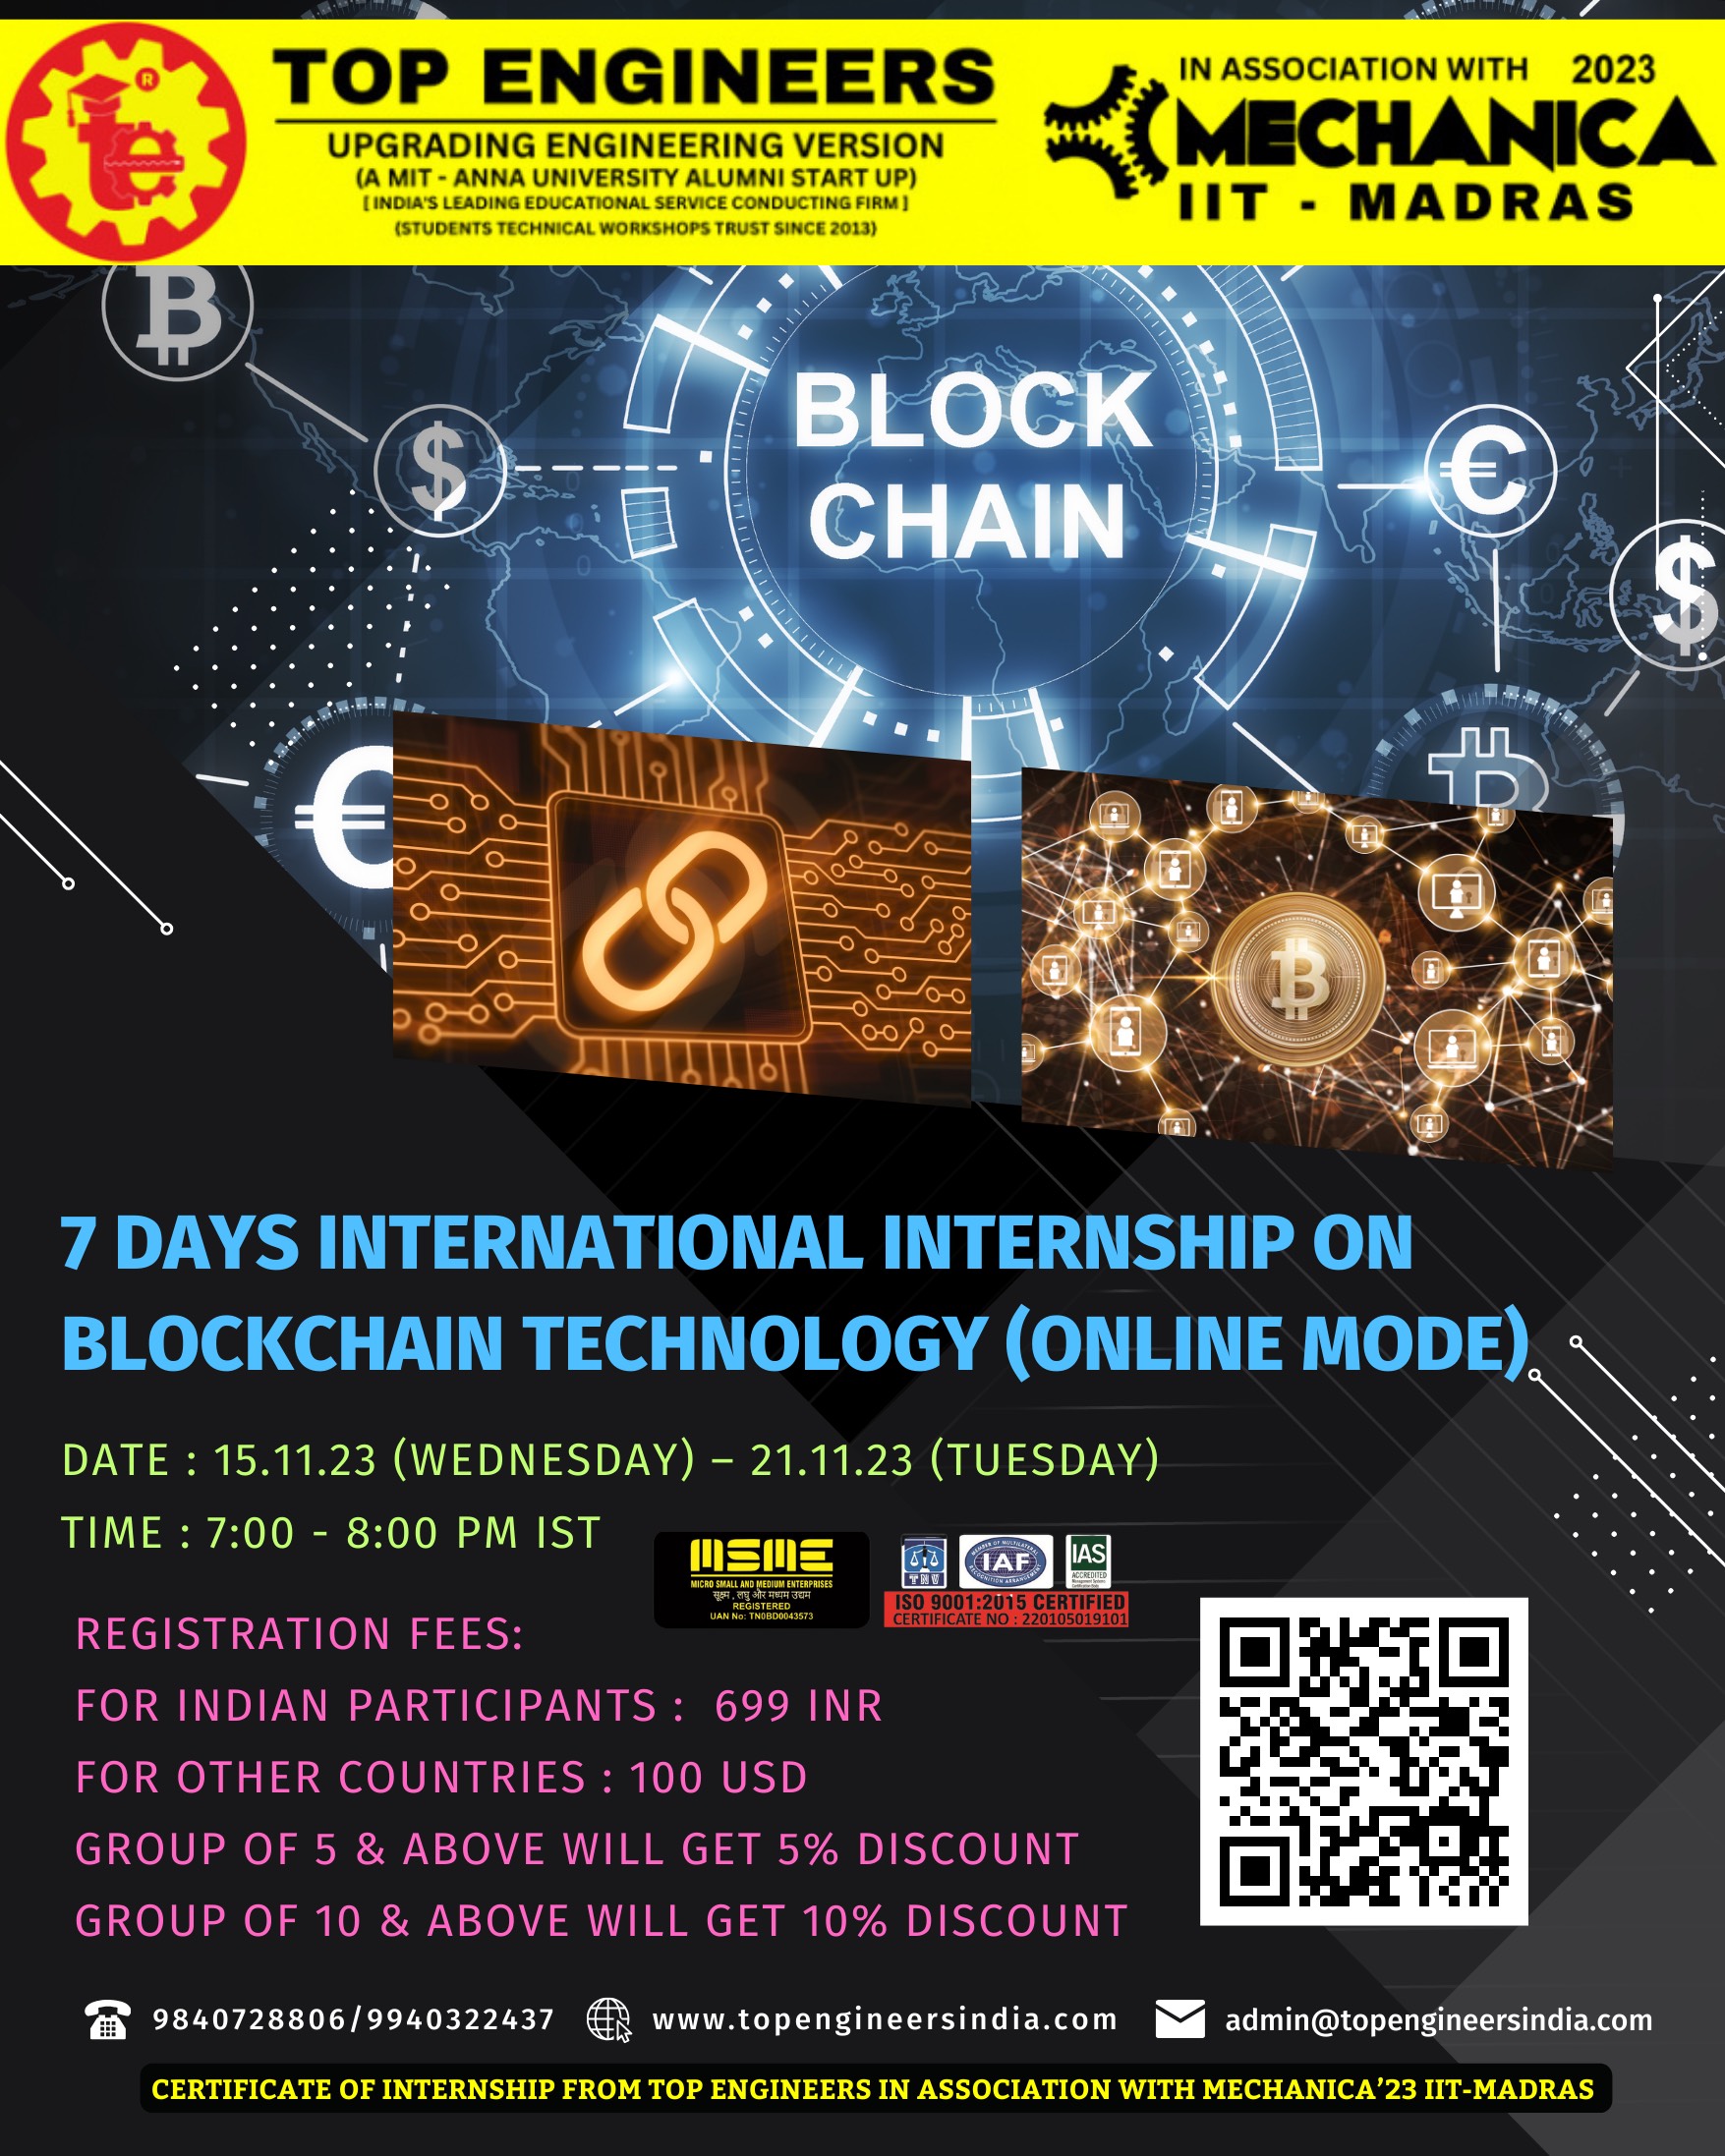 7 Days International Internship on Blockchain Technology 2023